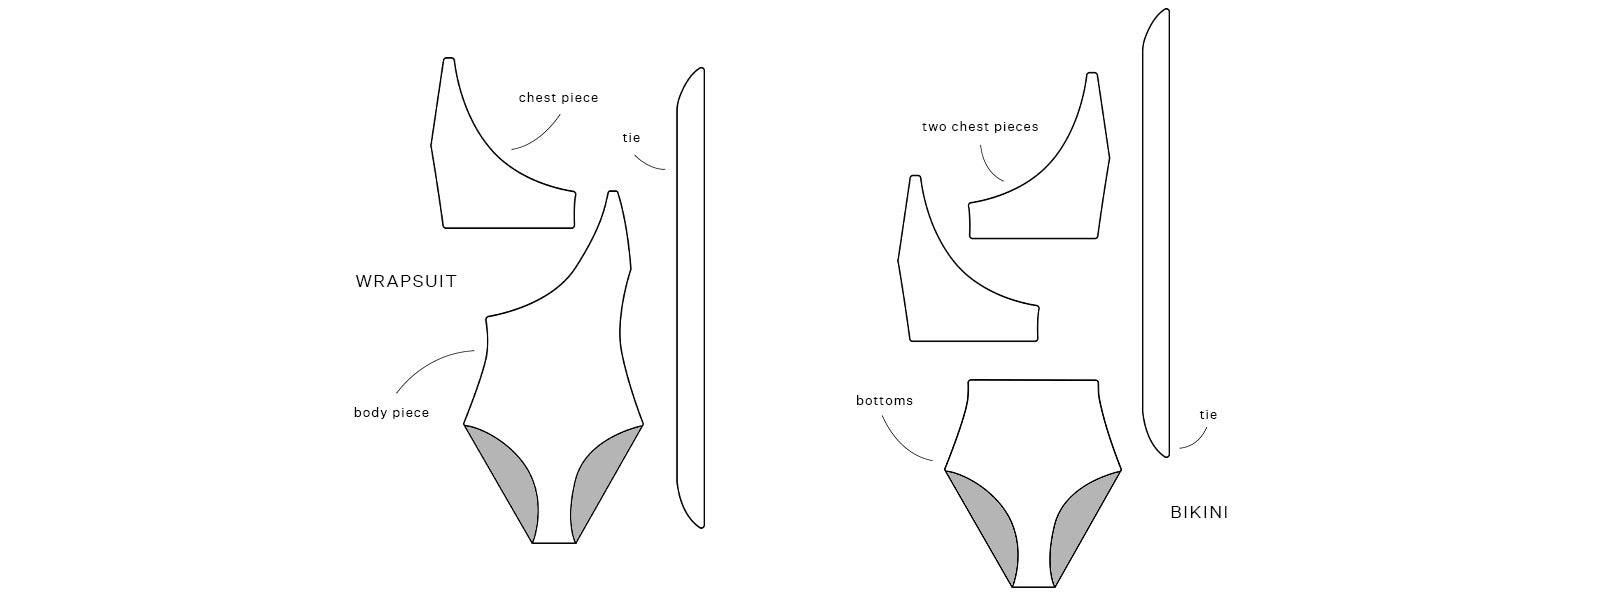 Baiia wrapsuit and bikini design multi way